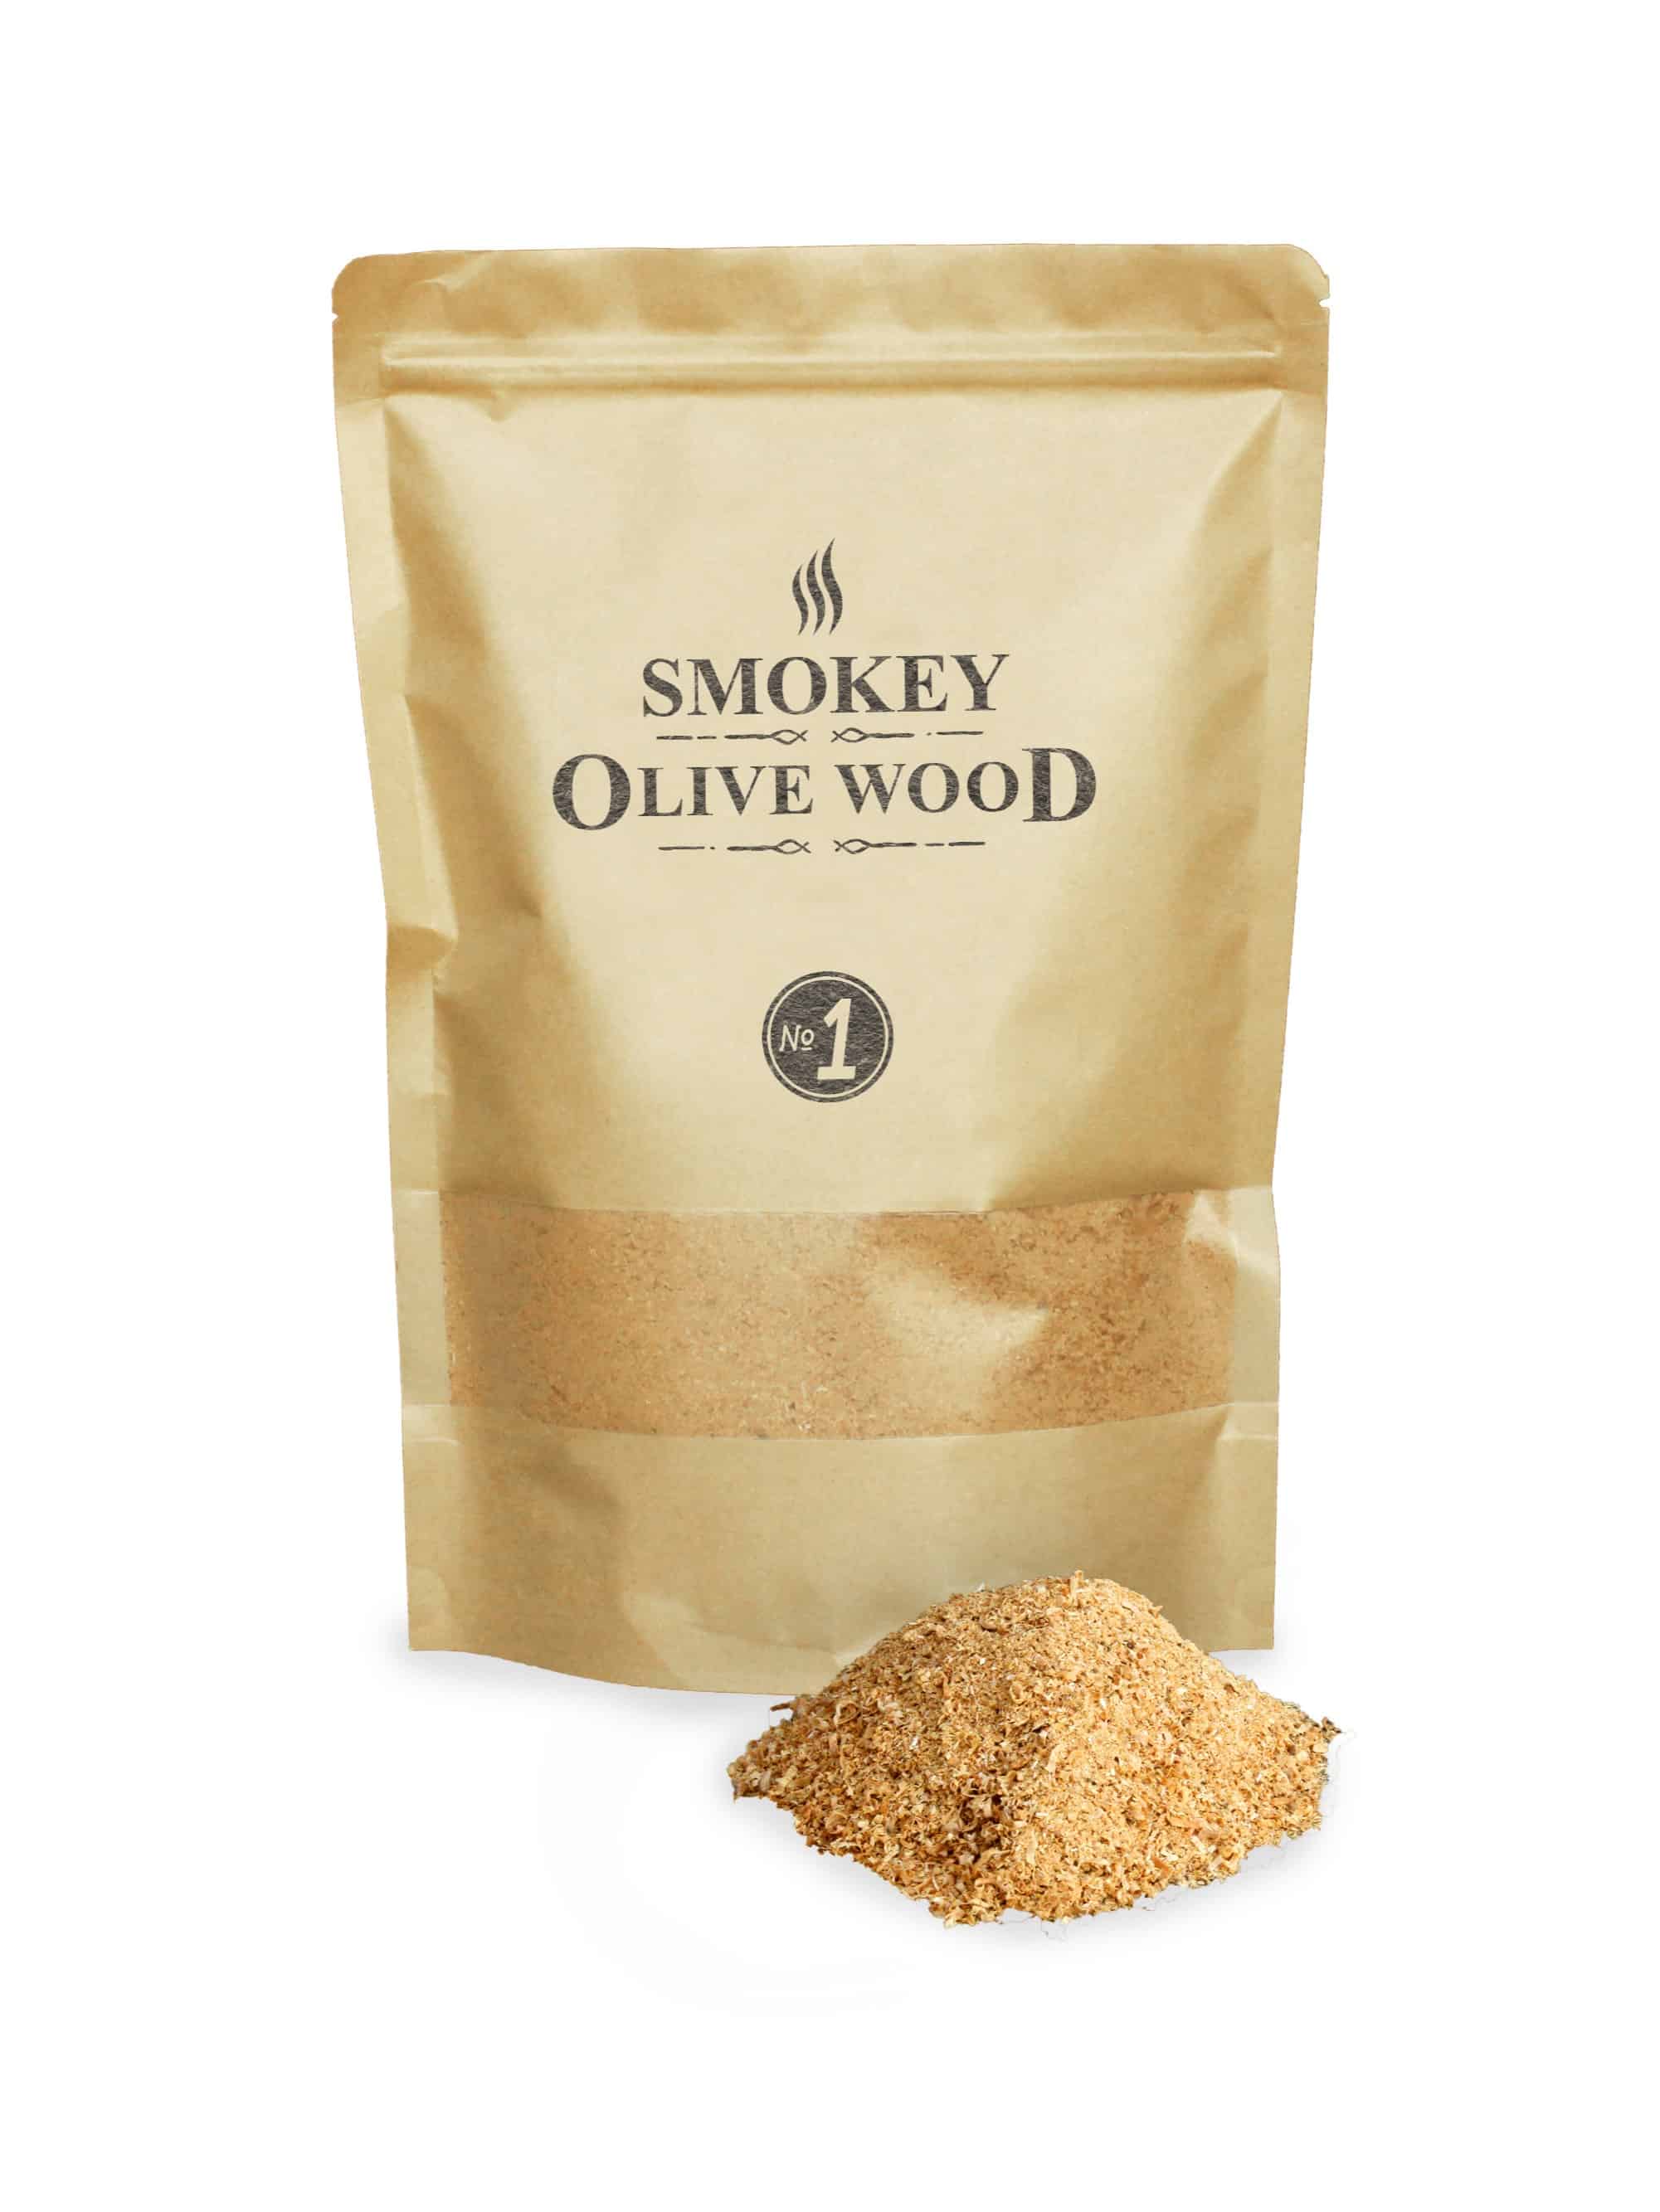 Smokey Olive Wood rookmot Nº1 Smoker BBQ Chips Grill rooken